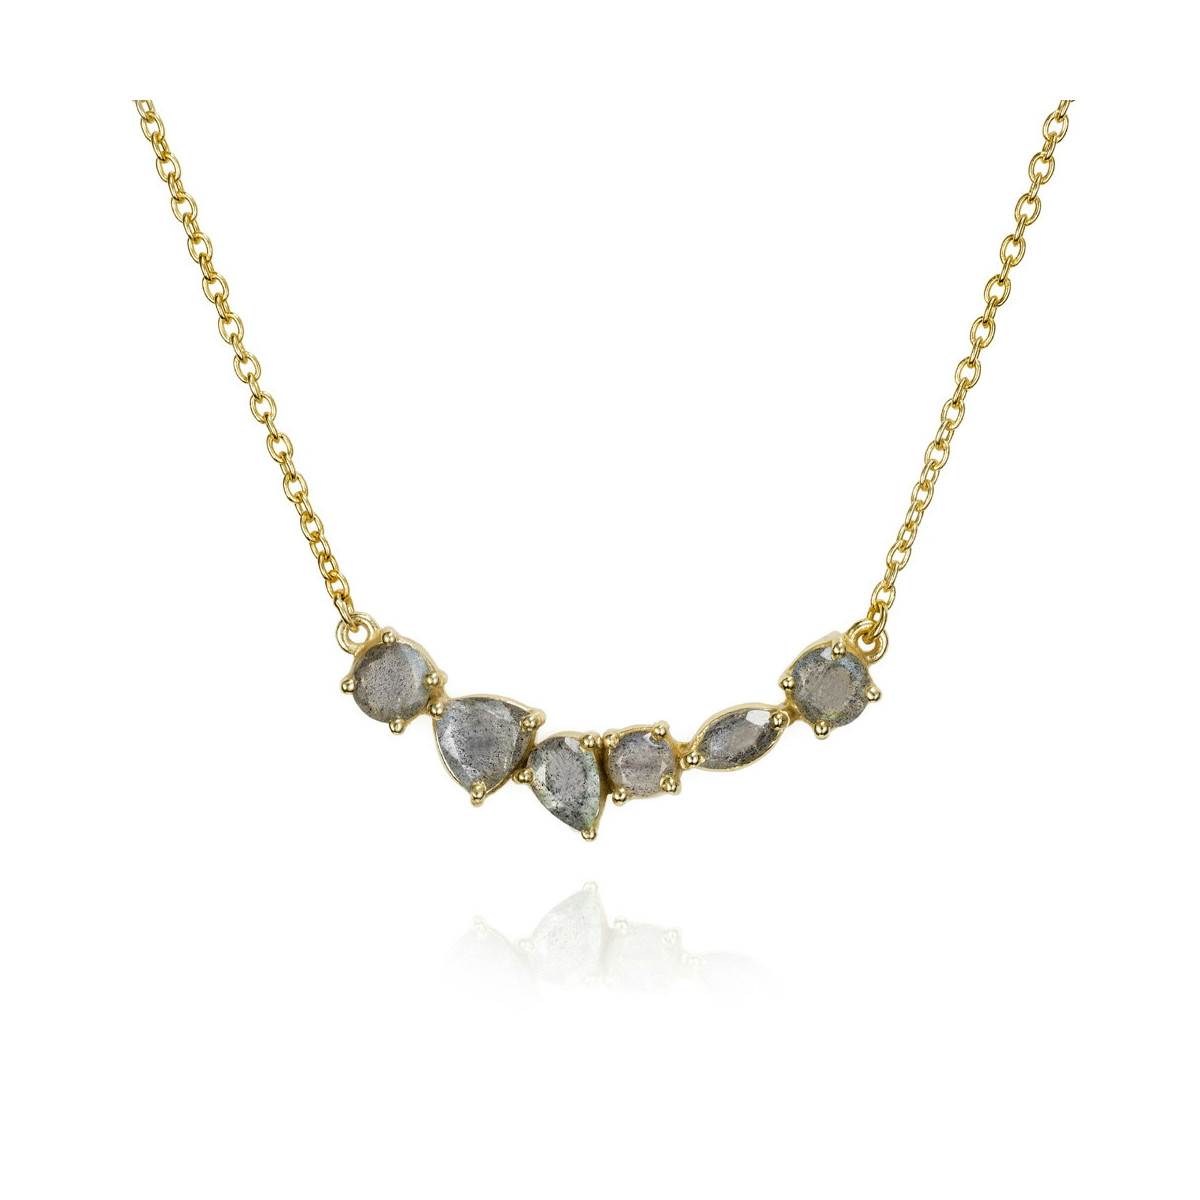 BELLA Necklace in Silver. 18k Gold Vermeil